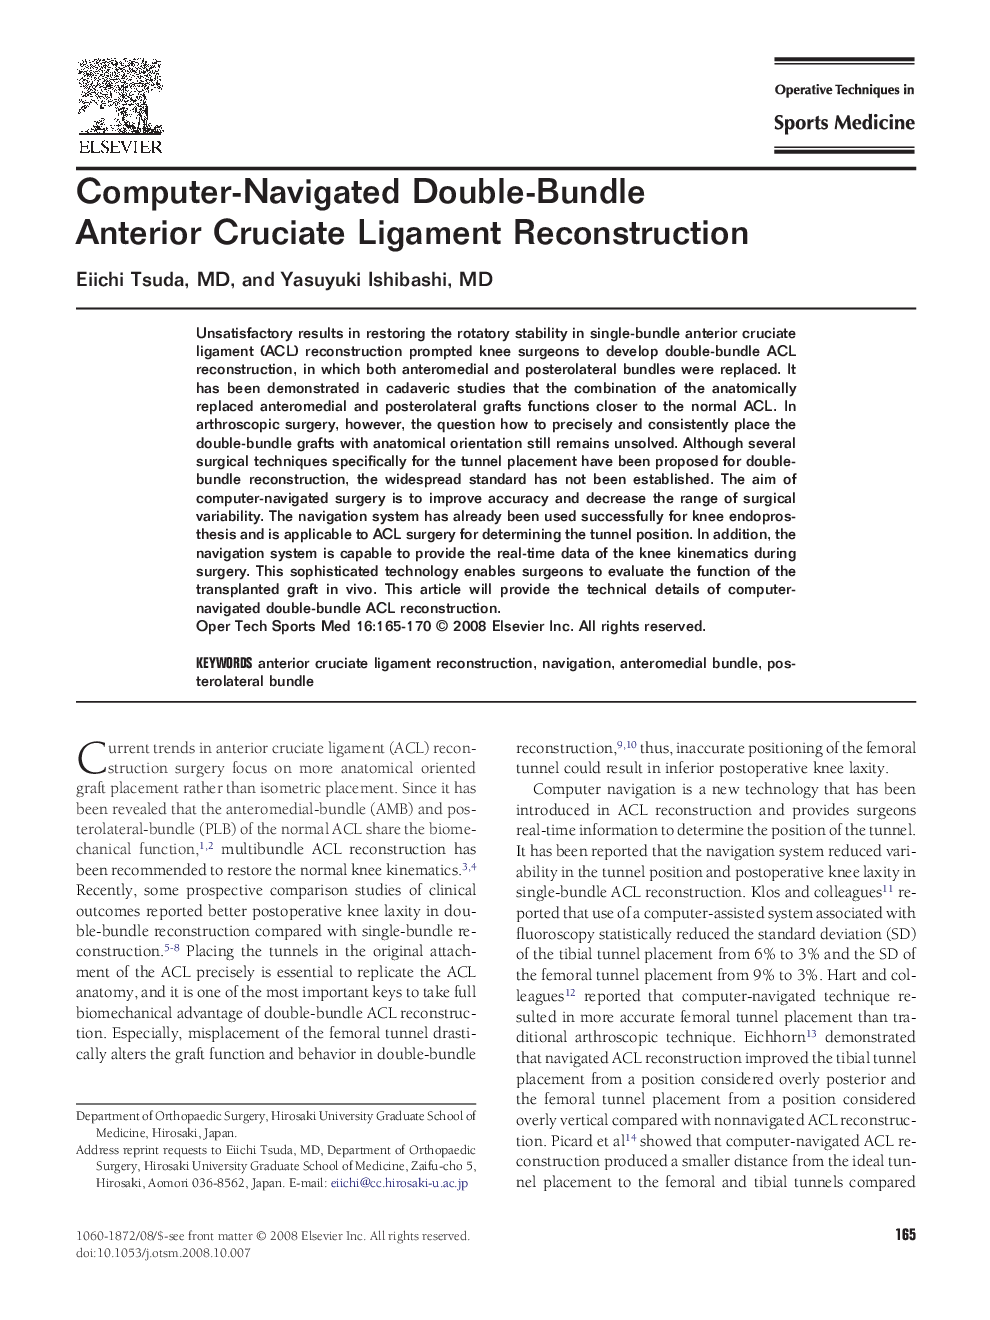 Computer-Navigated Double-Bundle Anterior Cruciate Ligament Reconstruction